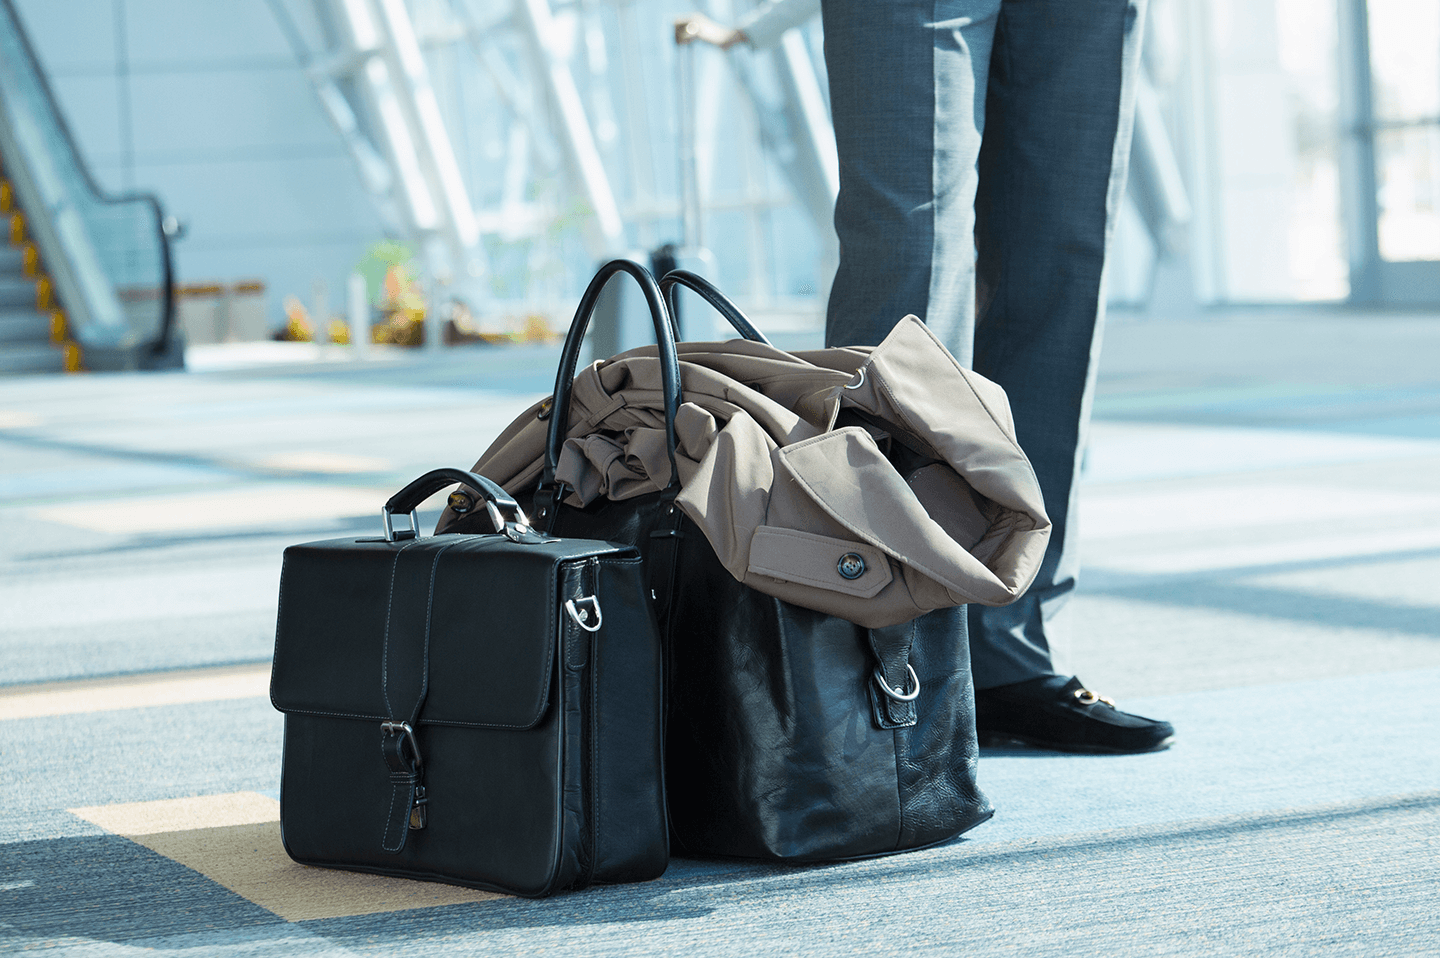 Coat and black hand luggage